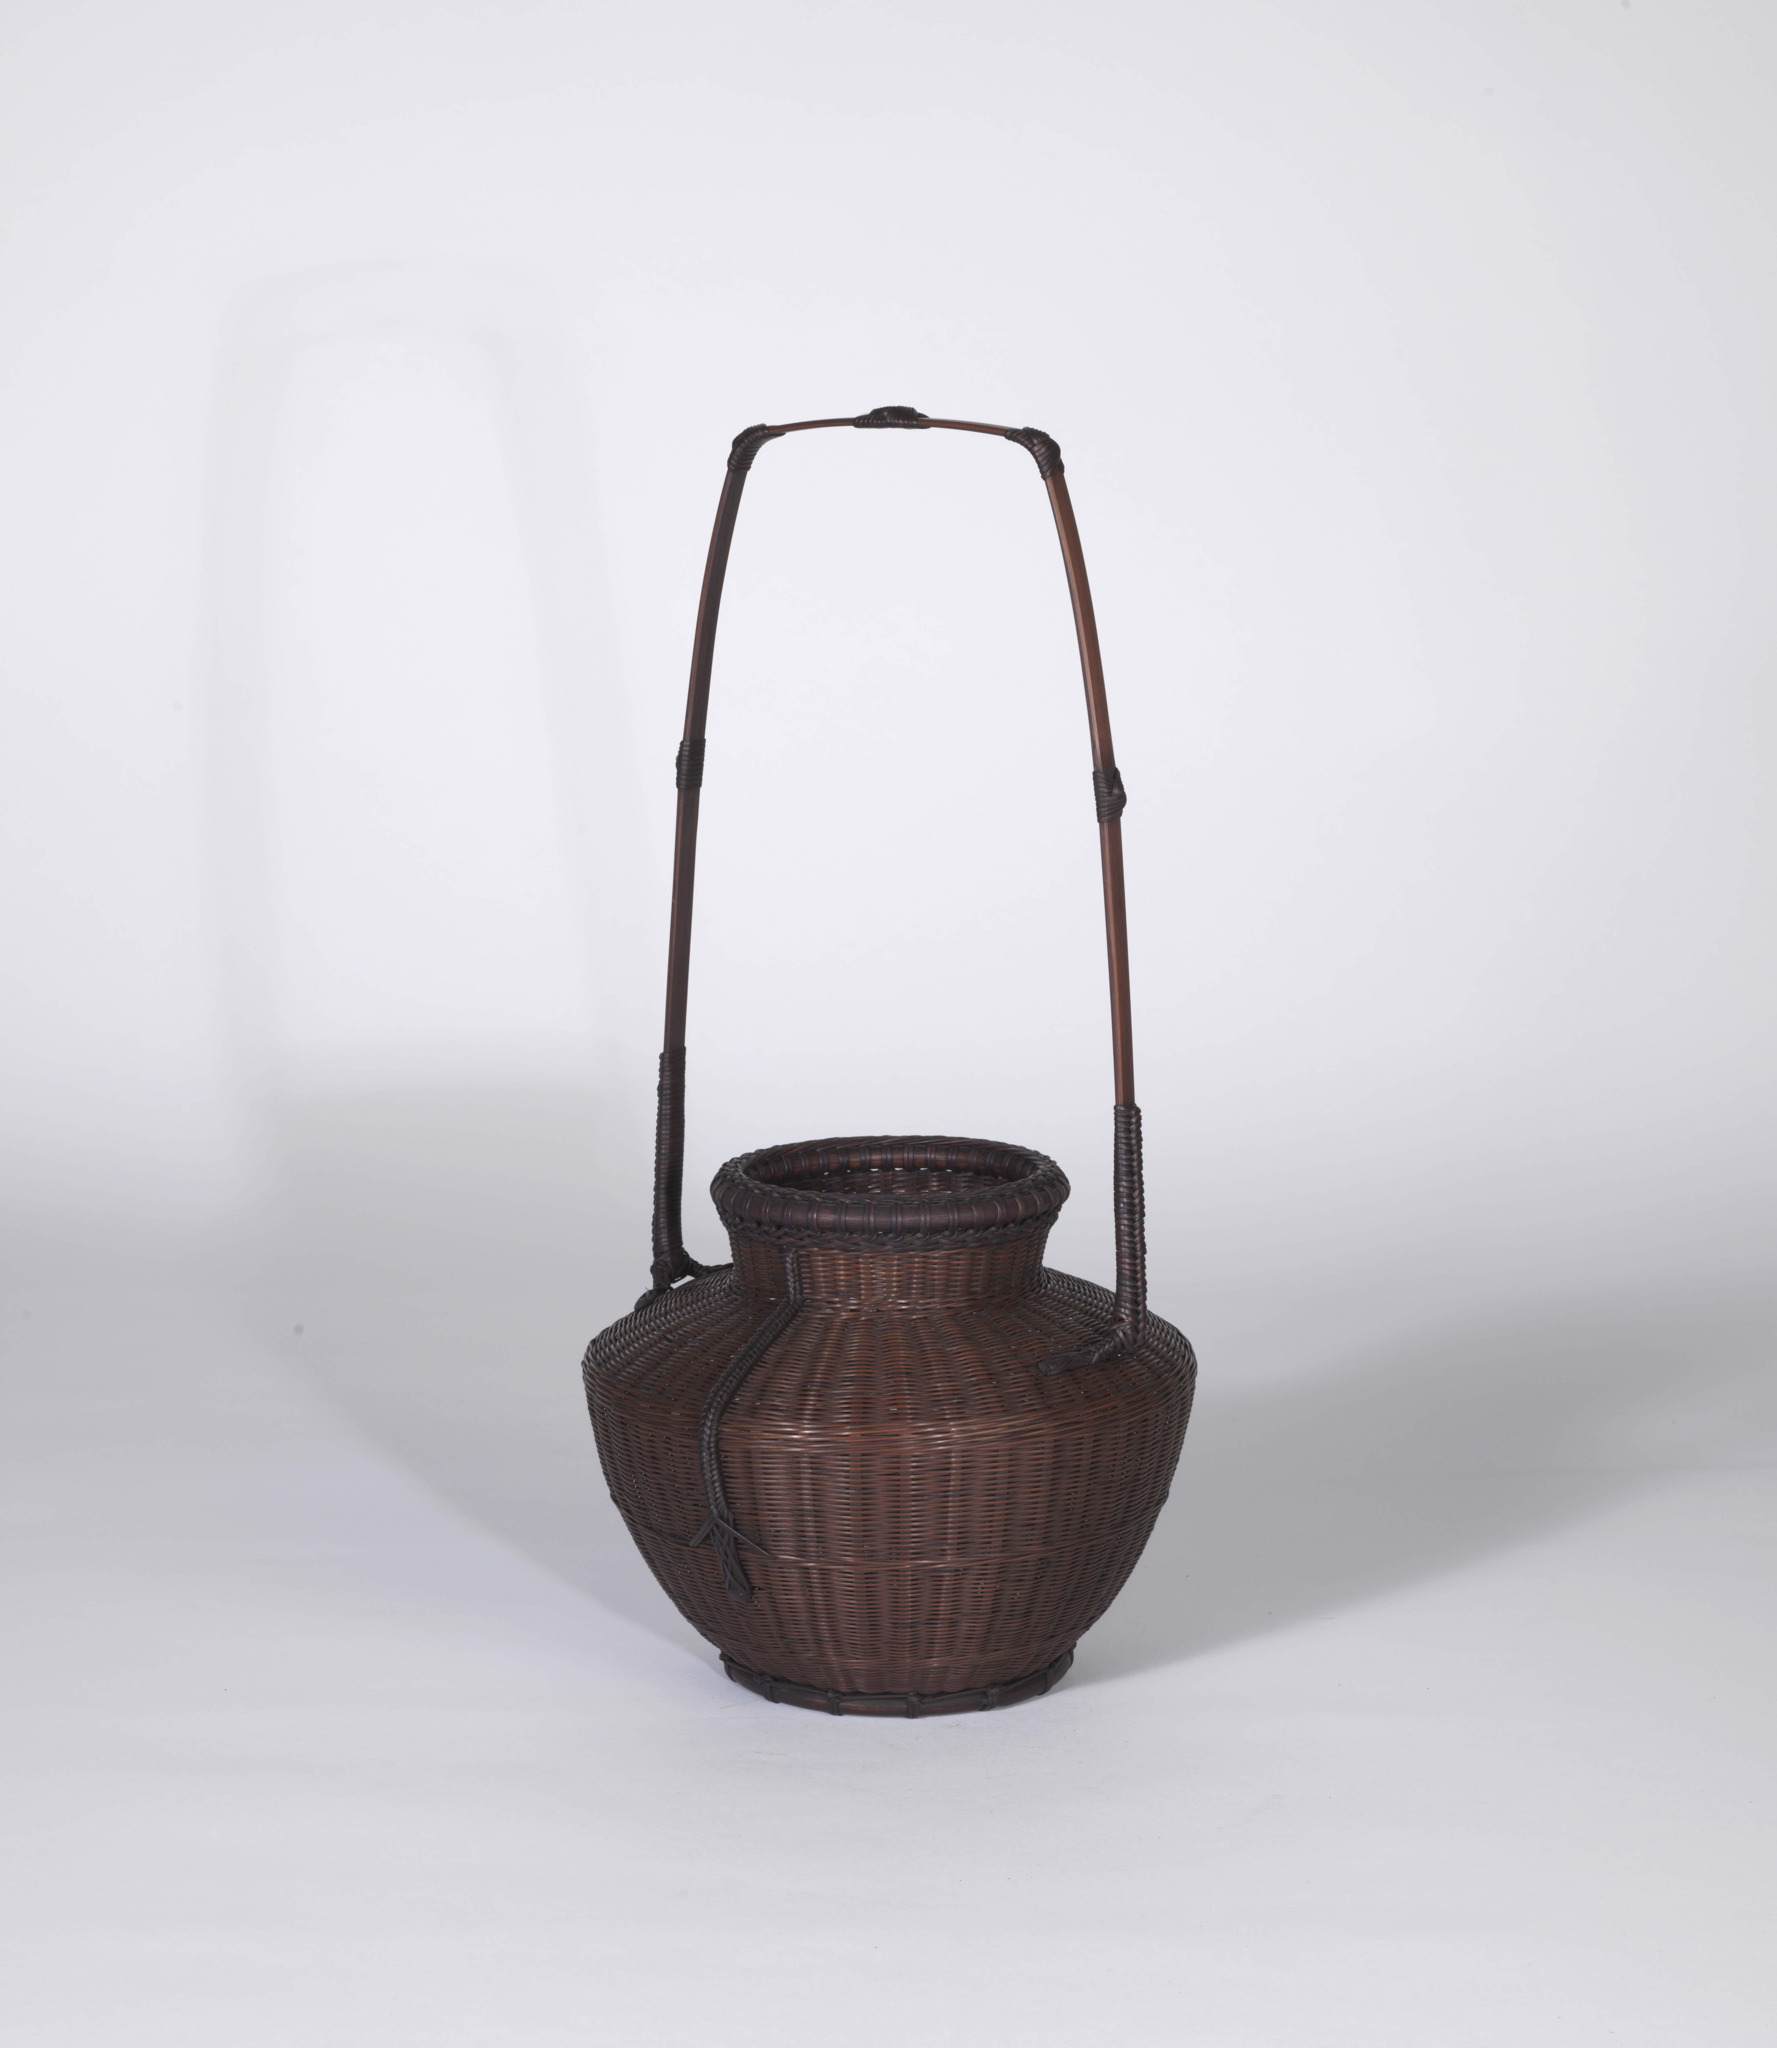 Hayakawa Shōkosai V (1932-2011), "Kofukuji Temple Style Peony Basket," madake rattan, 15.25 x 11.87 x 11.81 in., The Carl & Marilynn Thoma Foundation